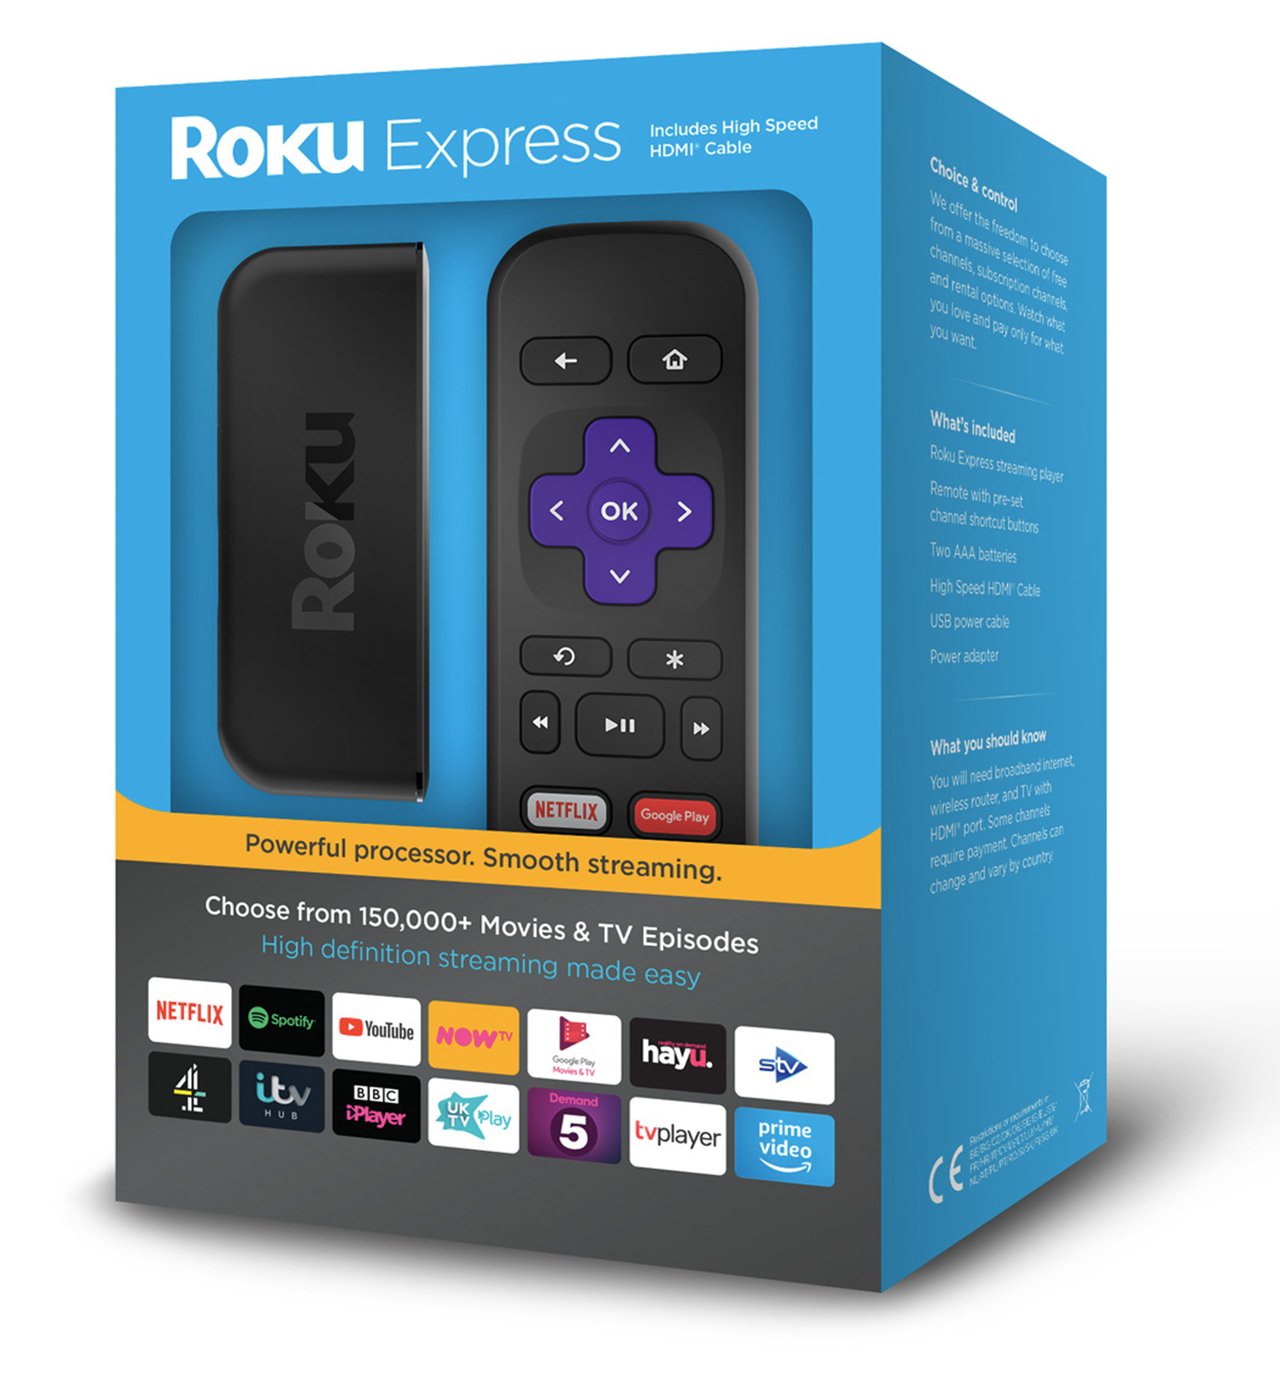 Roku Express HD Streaming Stick